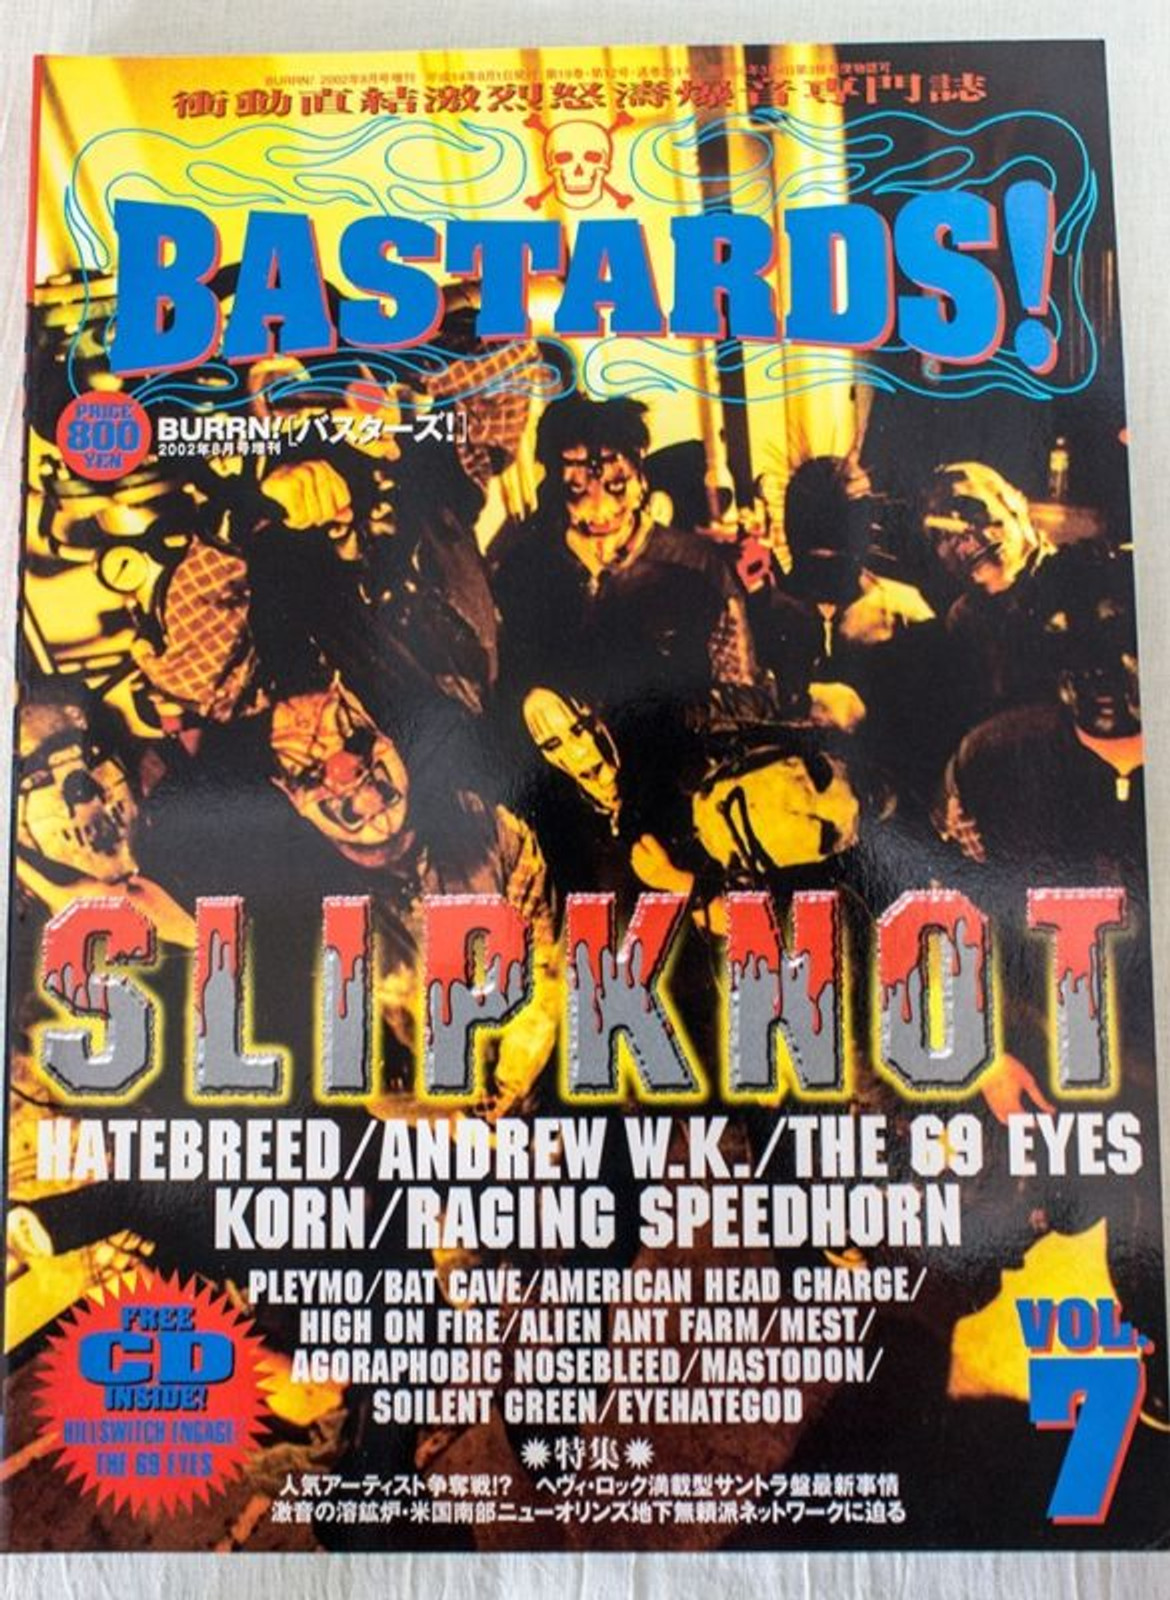 2002 Vol.7 BASTARDS! BURRN! Japan Magazine SLIPKNOT/THE 69 EYES/HATEBREED/KORN